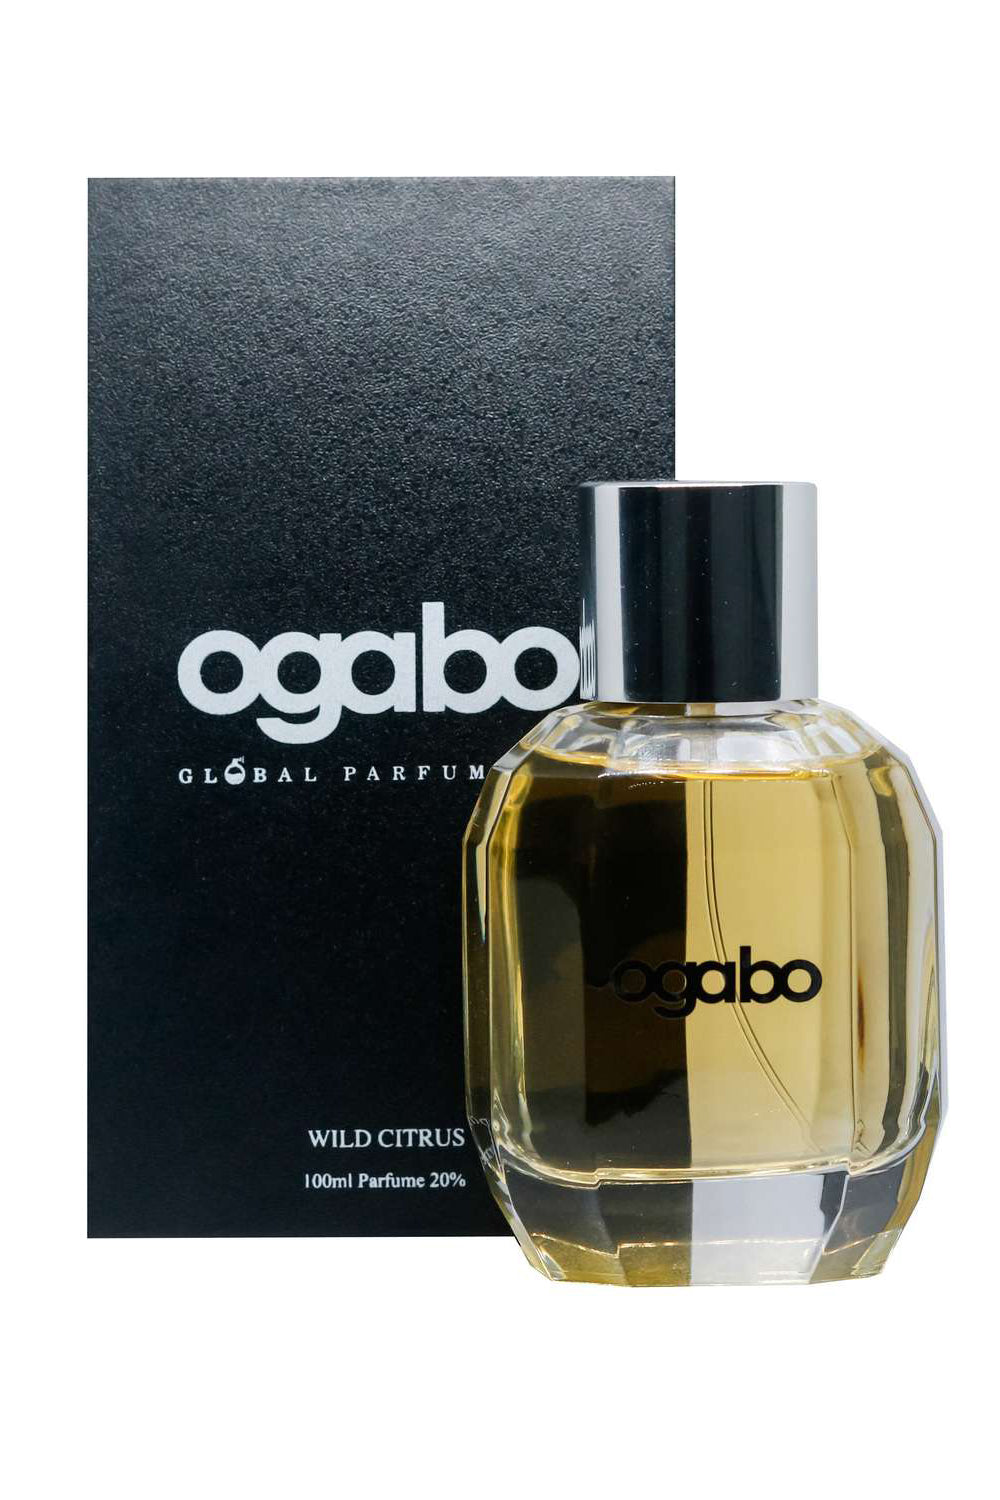 Ogabo Wild Citrus Men's Perfume 100ml